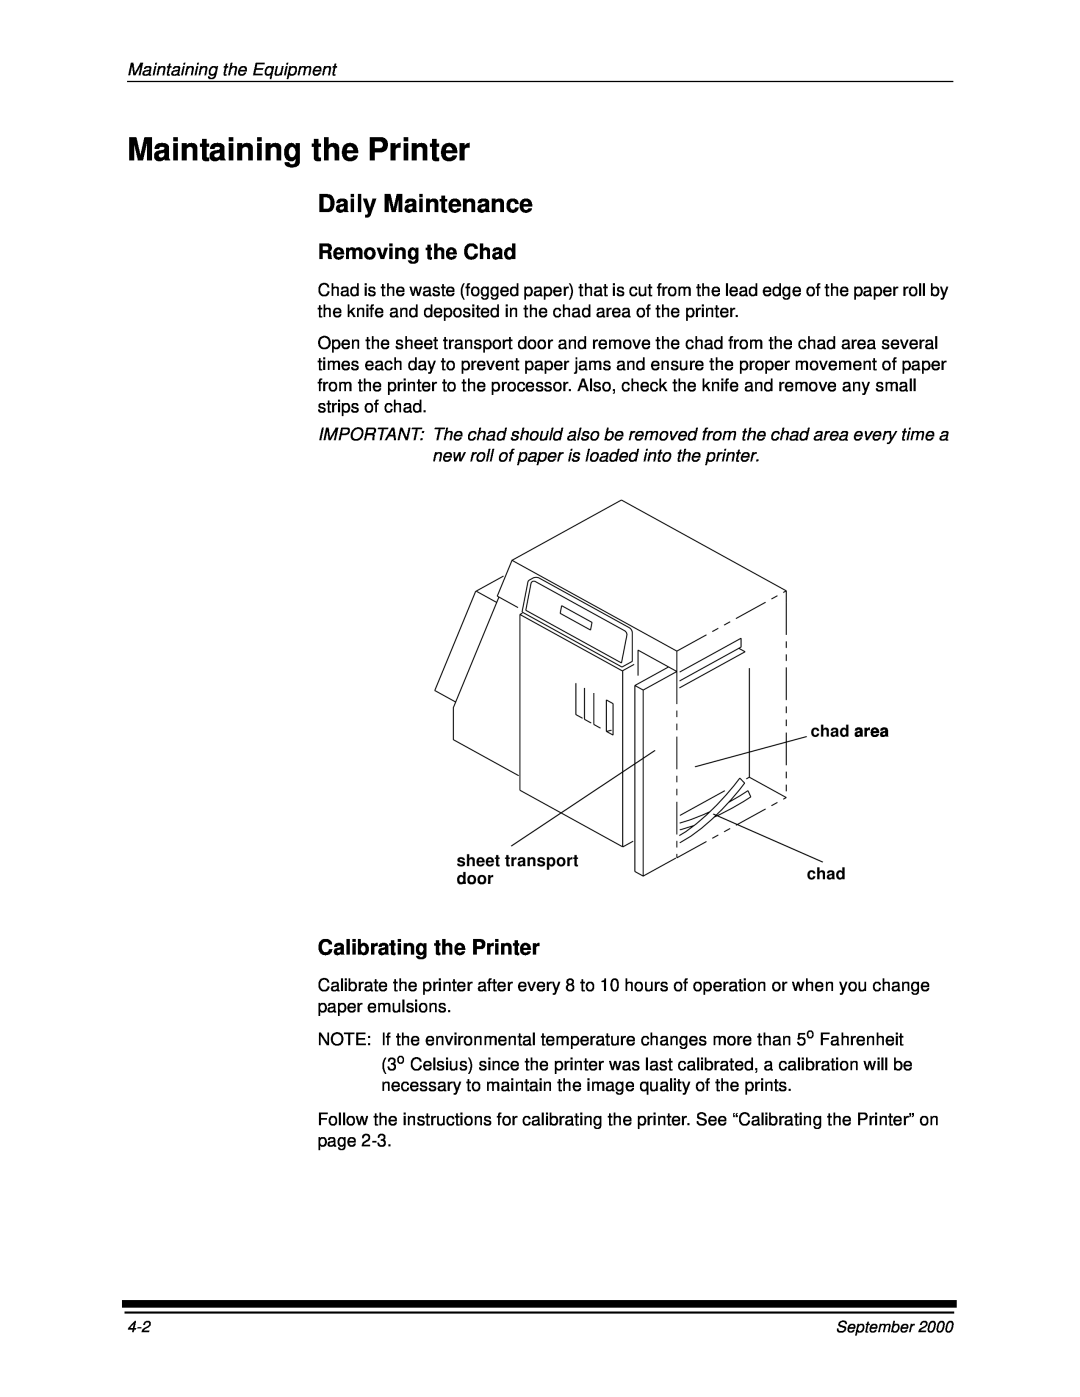 Kodak 20P manual Maintaining the Printer, Daily Maintenance, Removing the Chad, Calibrating the Printer 